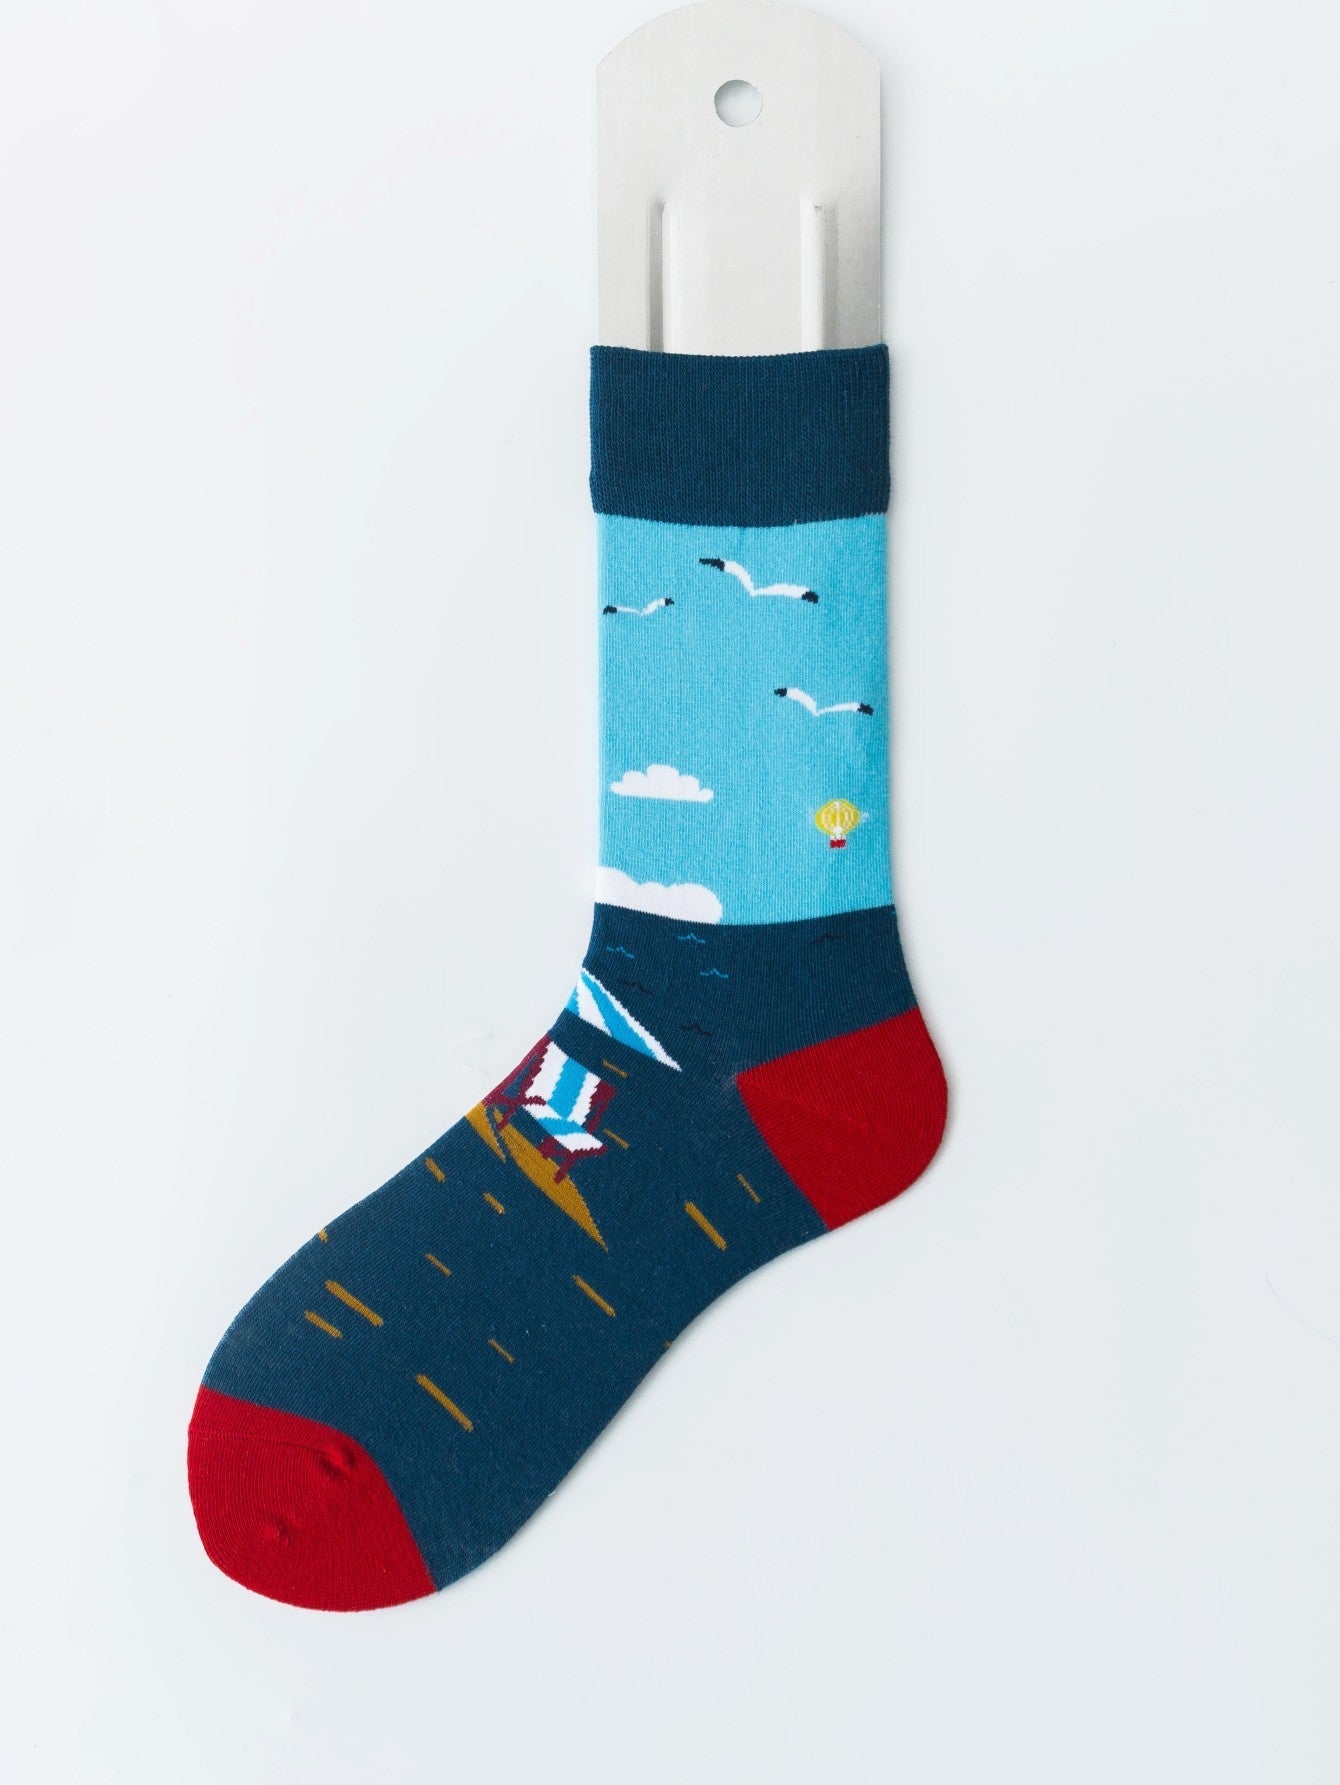 5Pairs Comfortable Cotton Sock Slippers Socks  Printed Ankle Socks Sai Feel